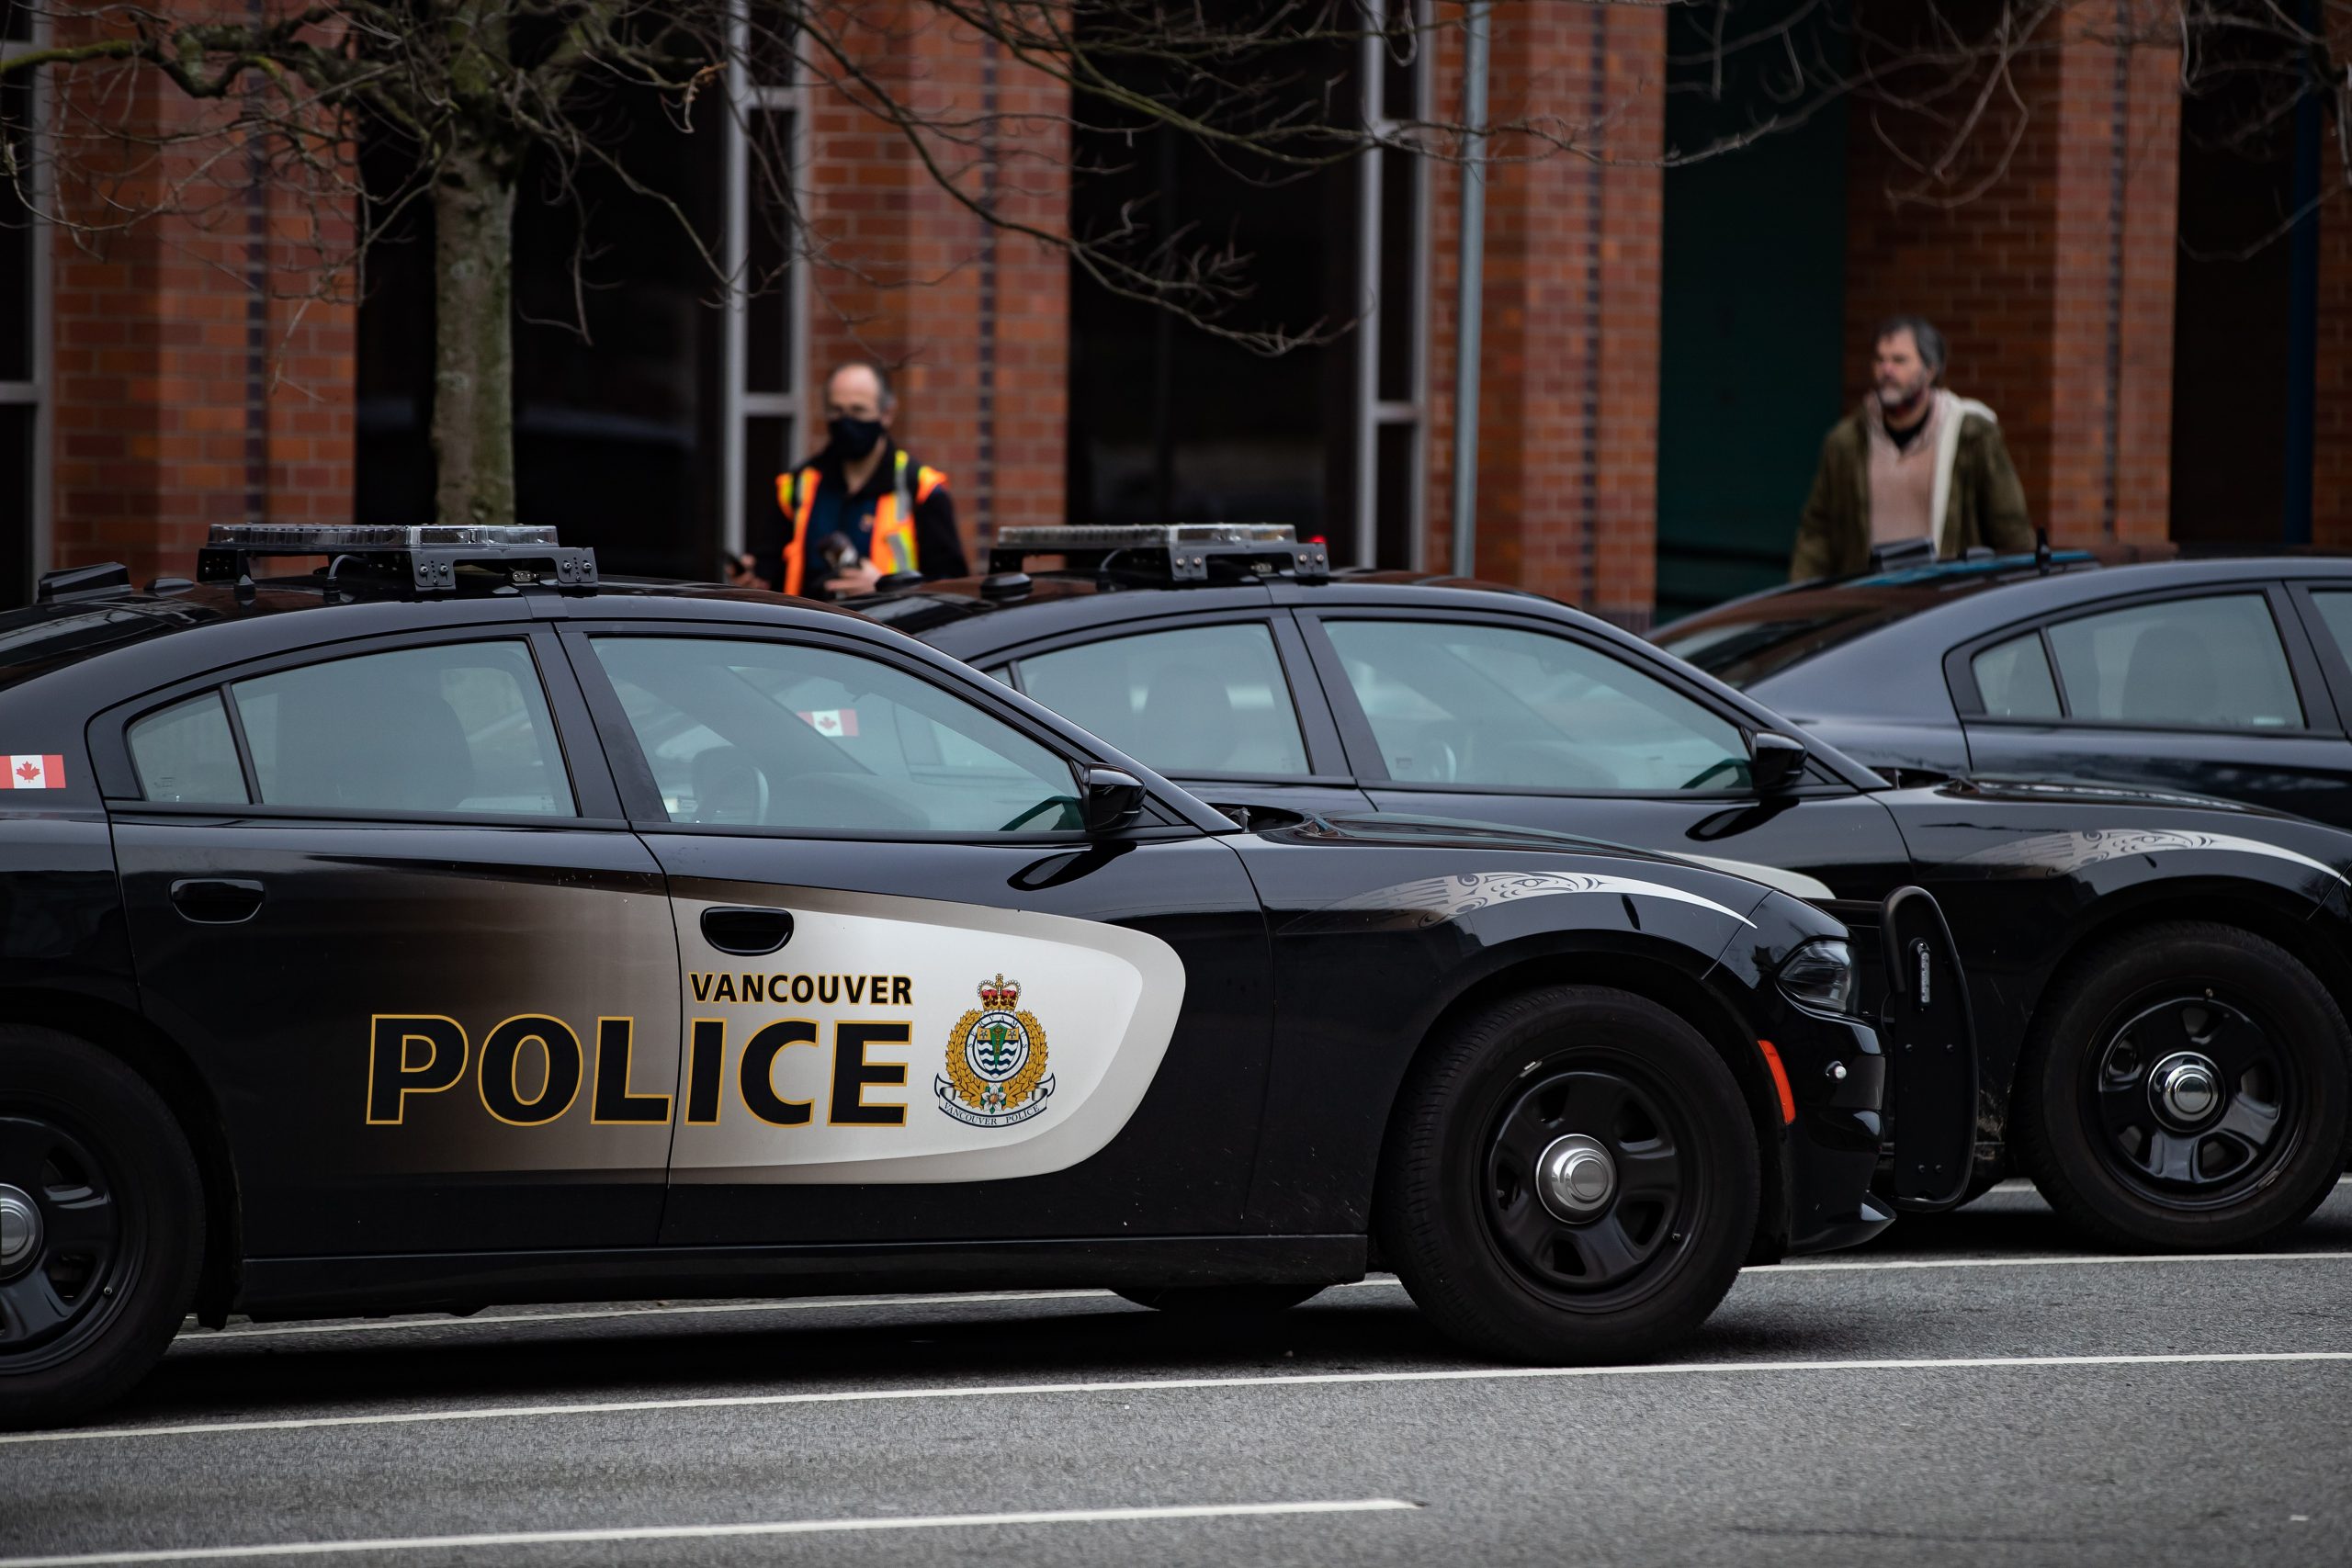 Vancouver Police car